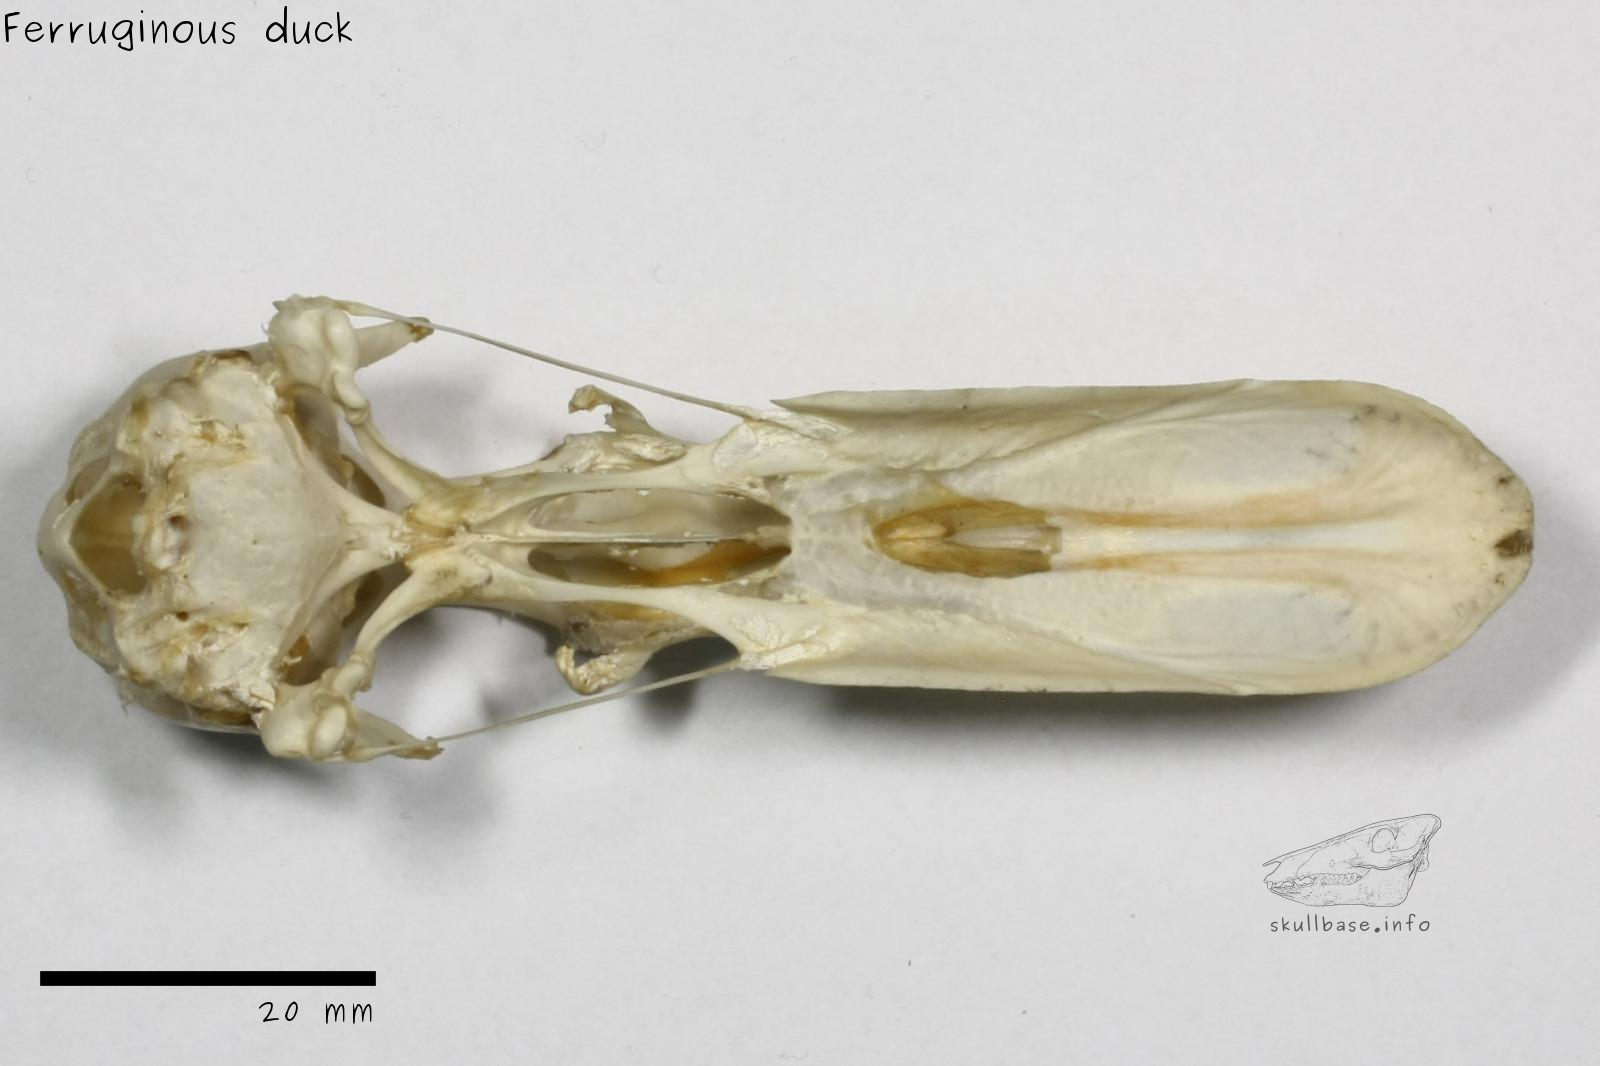 Ferruginous duck (Aythya nyroca) skull ventral view